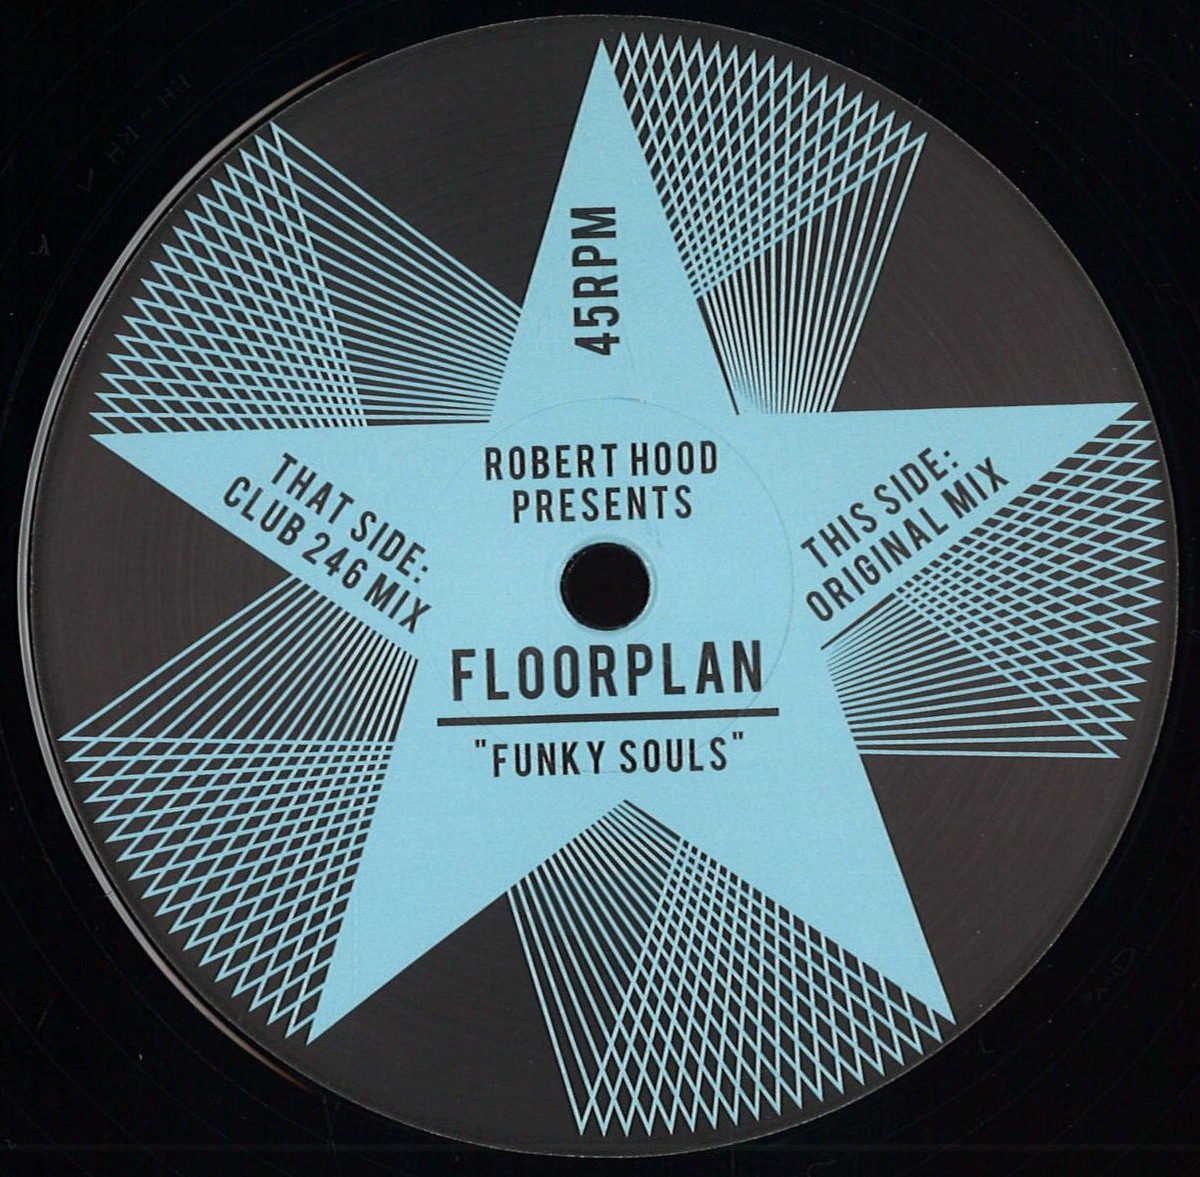 Funky souls. Funkysouls Vinyl. Funky Souls игра. Funky Soul магазин. Rare Vinyl LP Funk Soul album.